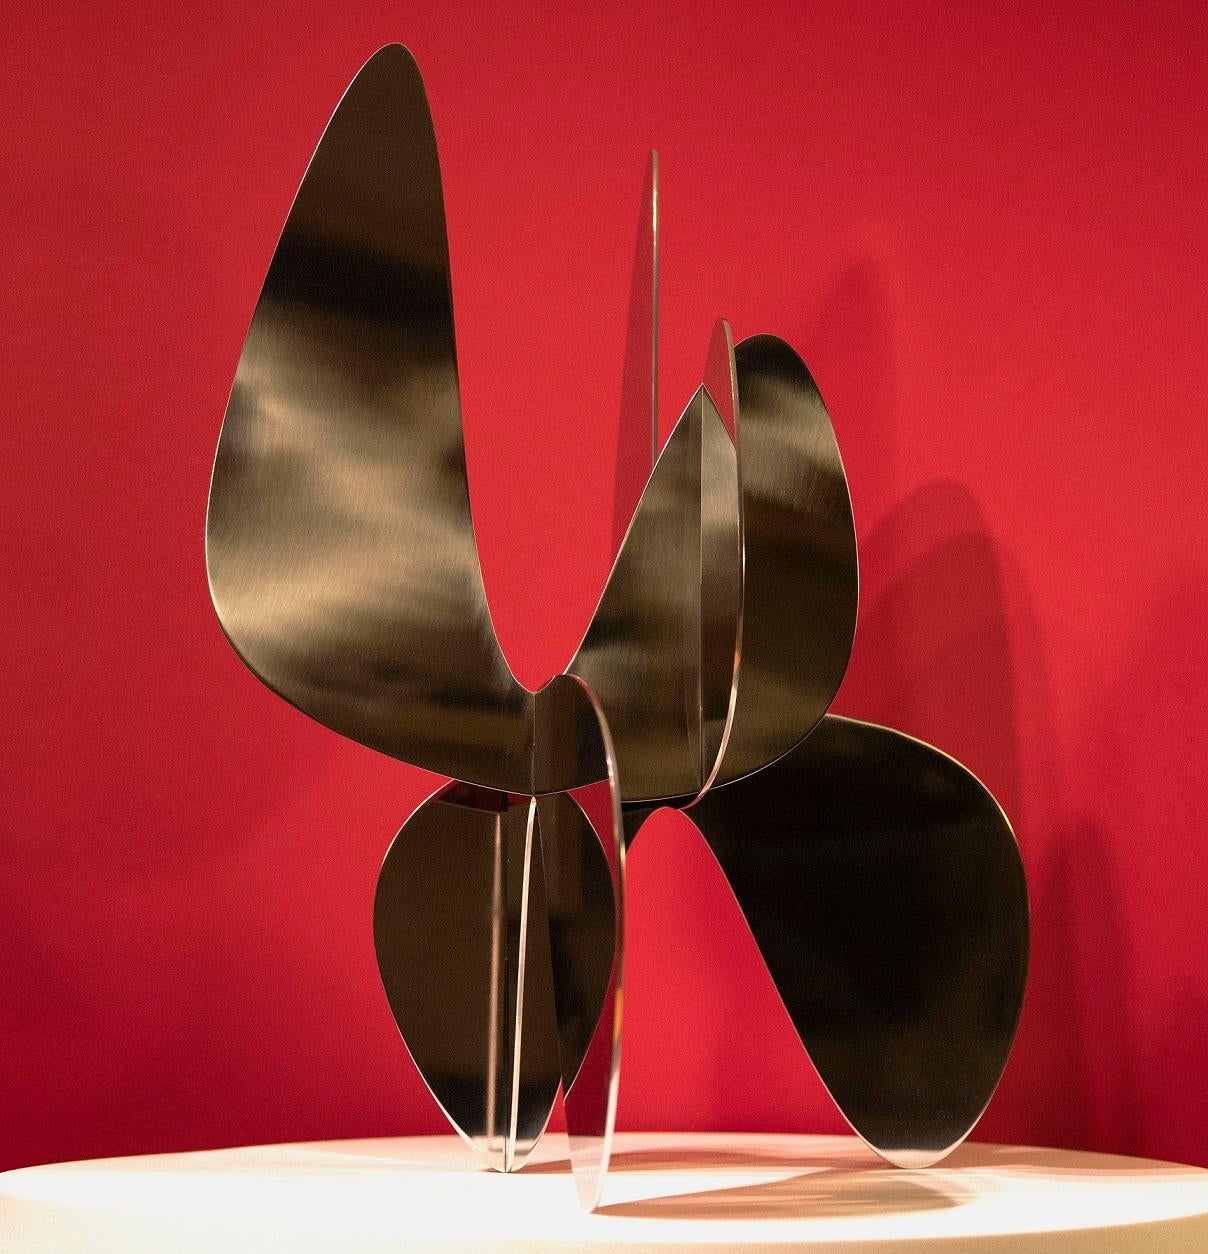 Alejandro Vega Beuvrin Abstract Sculpture - Barricada #9 aip M2 by A. Vega Beuvrin - abstract sculpture, stainless steel